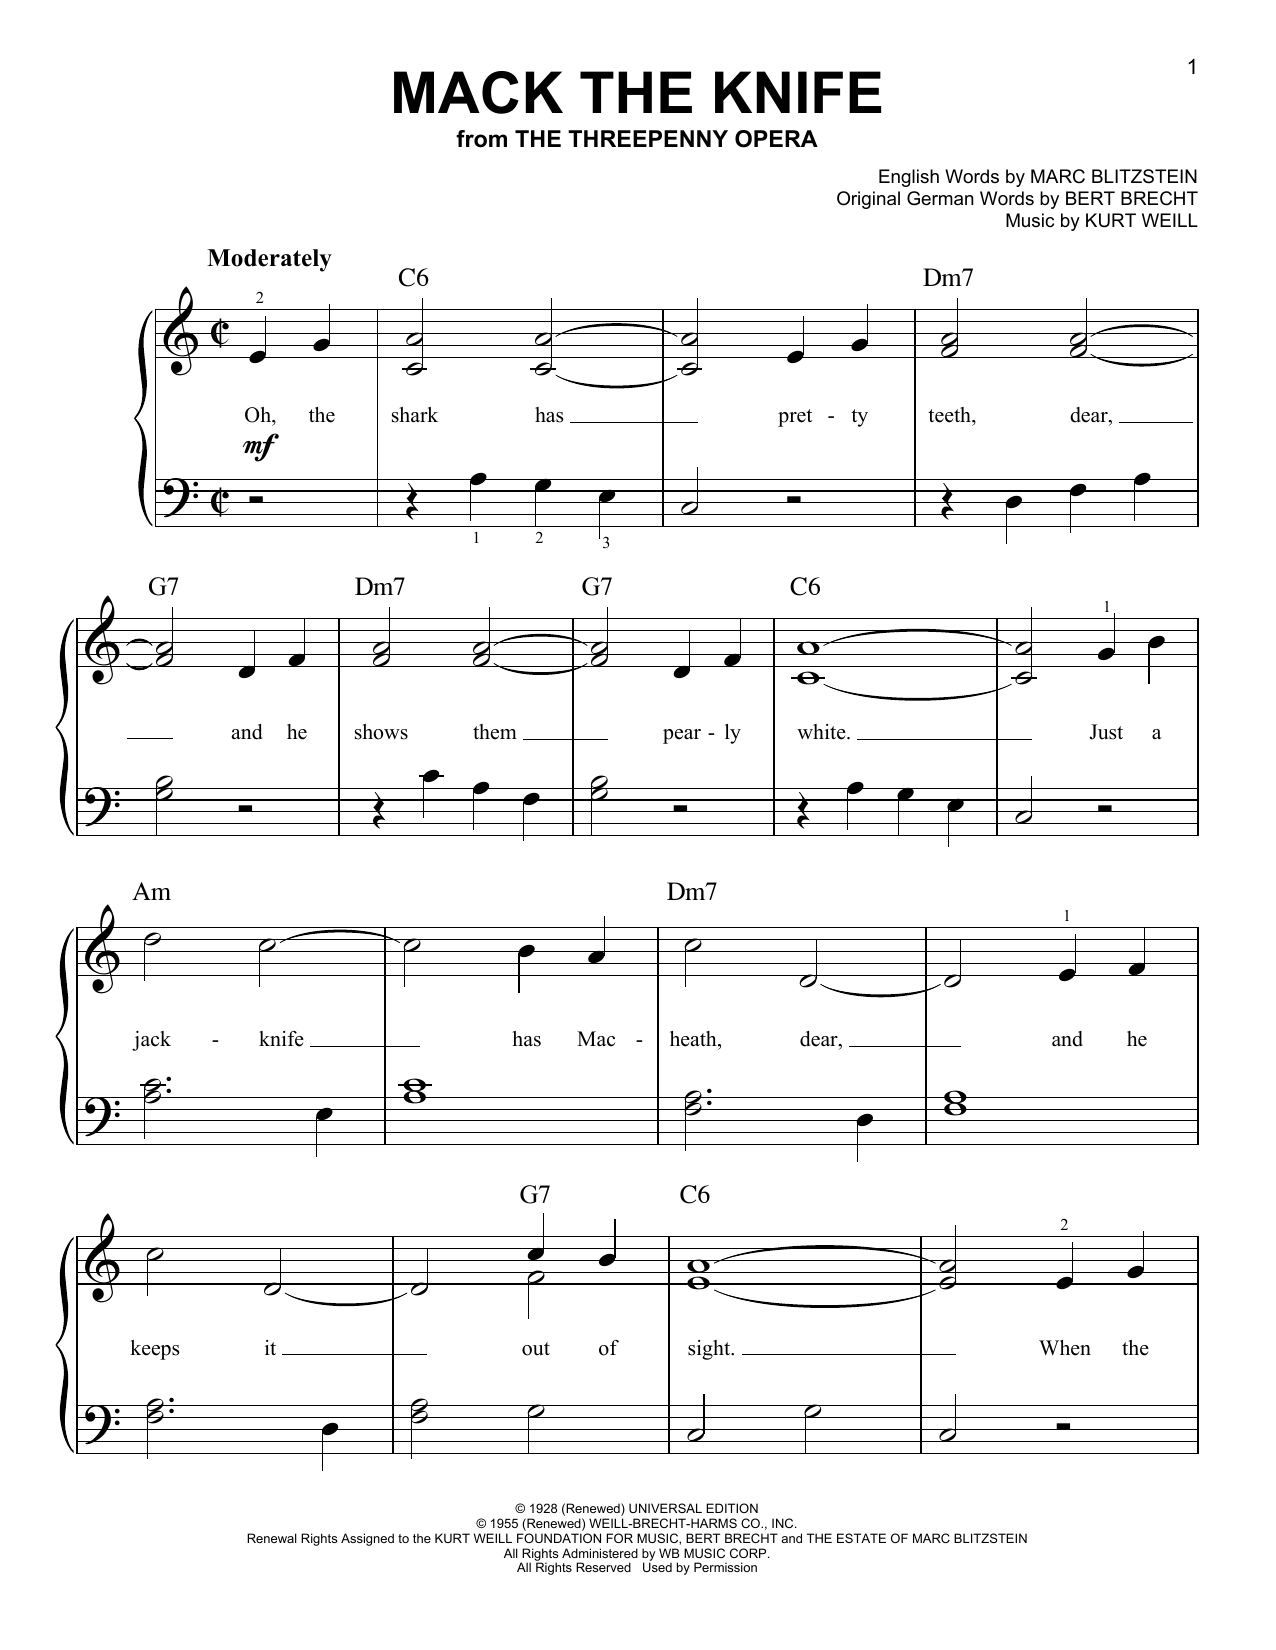 Bobby Darin Mack The Knife sheet music notes and chords. Download Printable PDF.